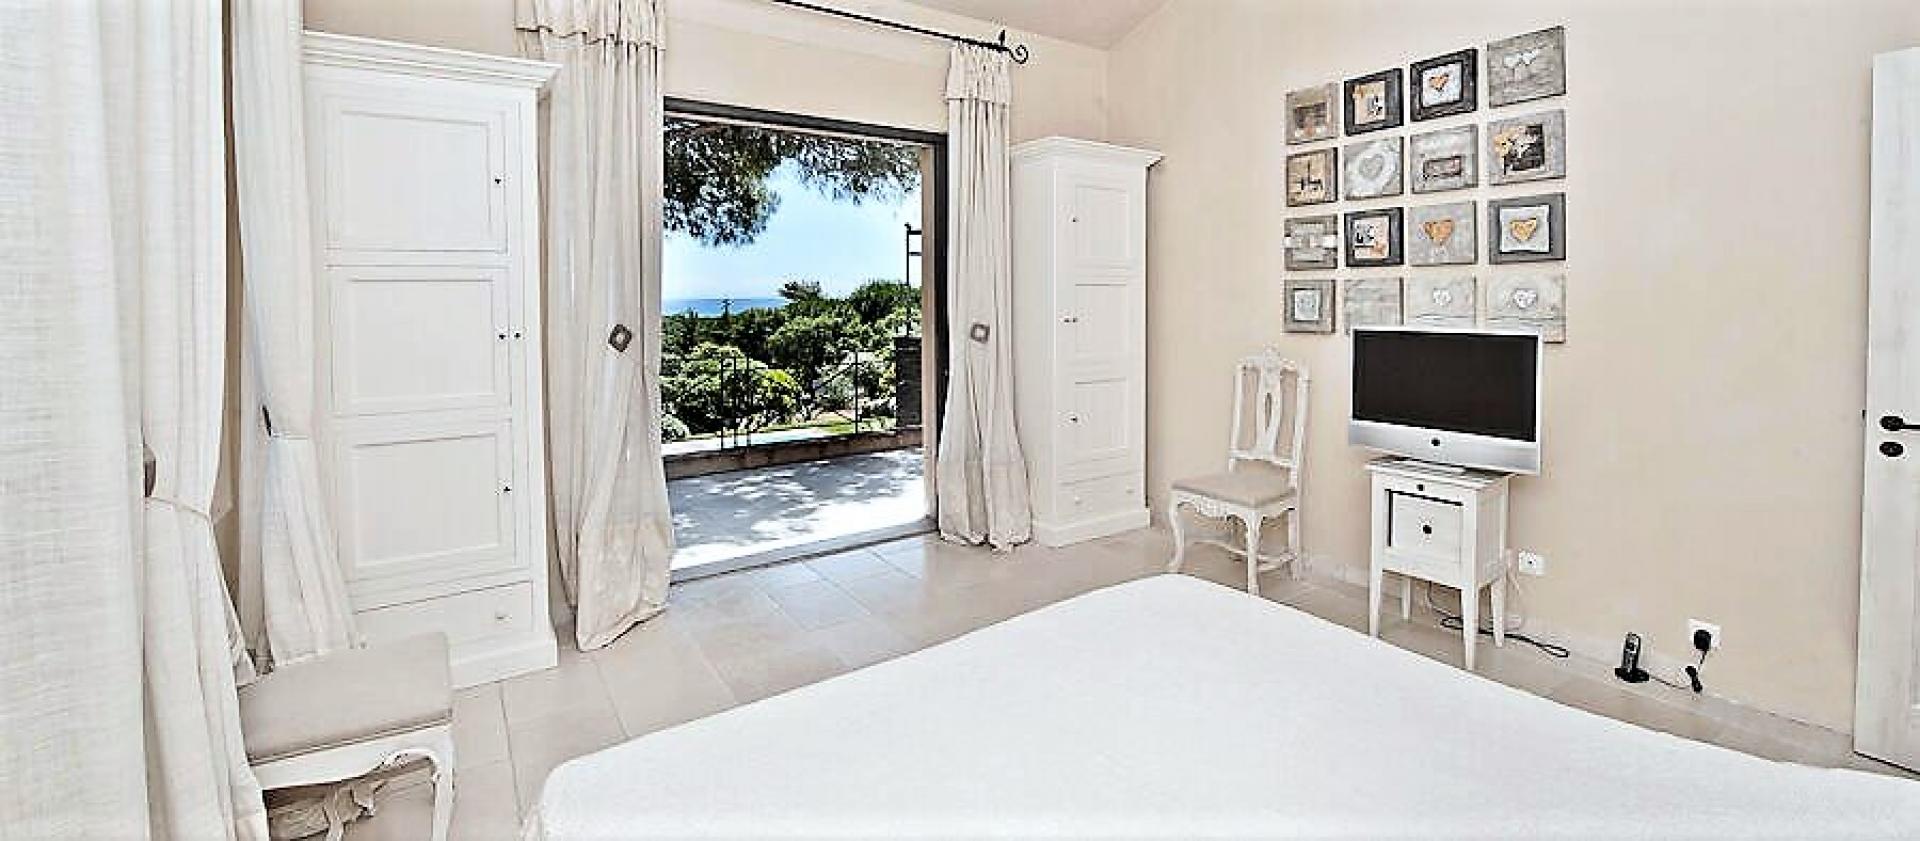 Another en-suite bedroom with views on the garden